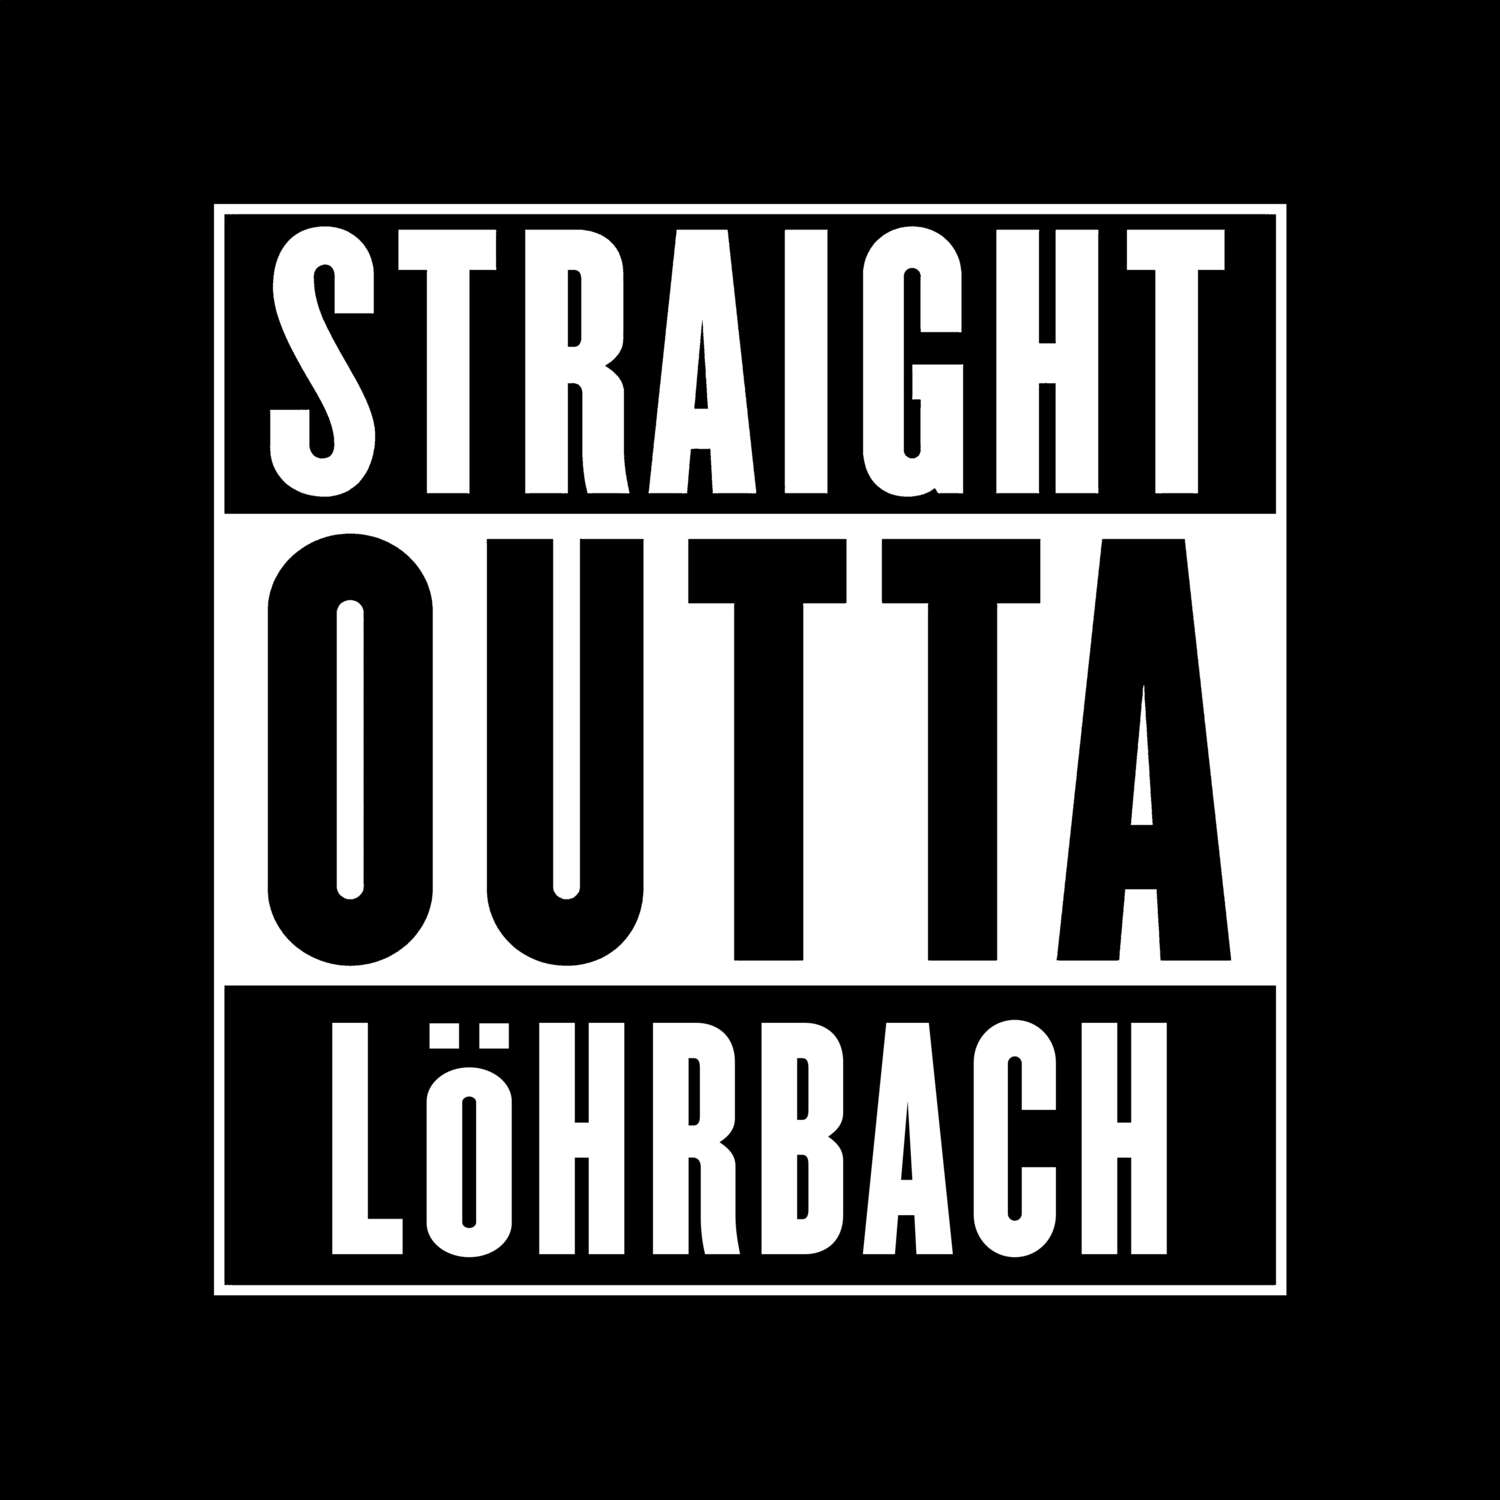 Löhrbach T-Shirt »Straight Outta«